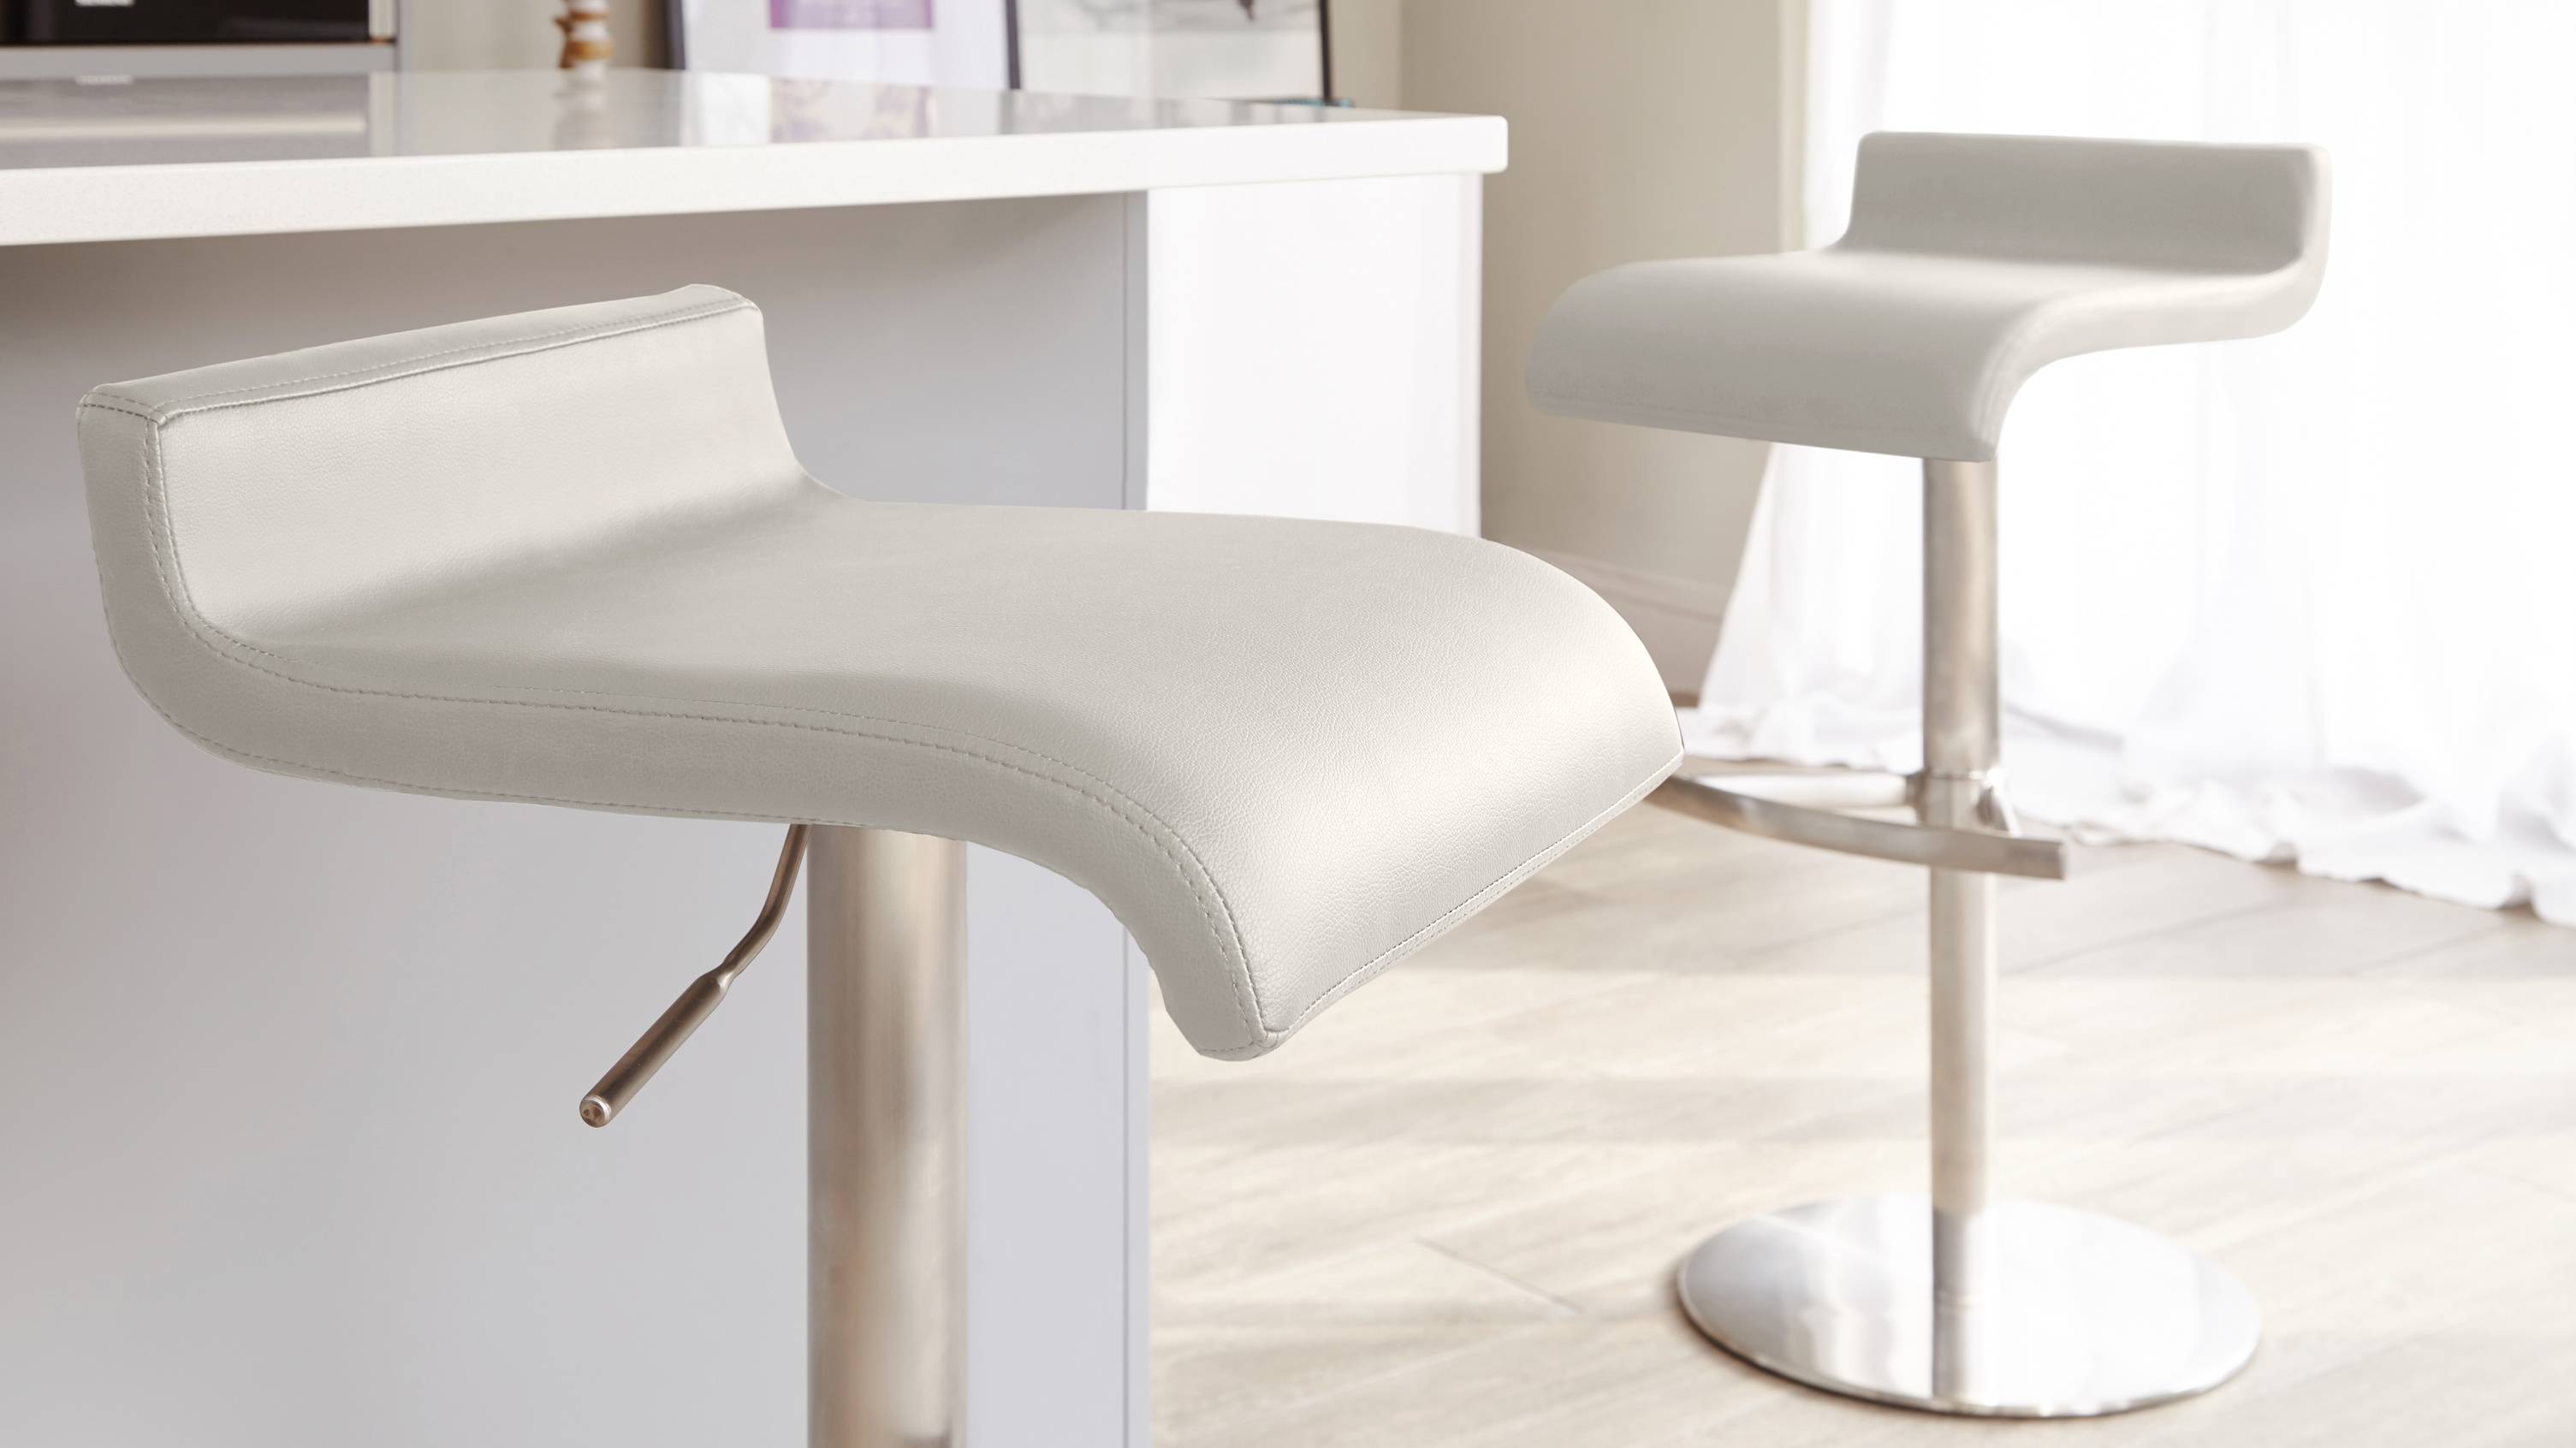 Light Grey Bar stool with a Brushed Metal Finish